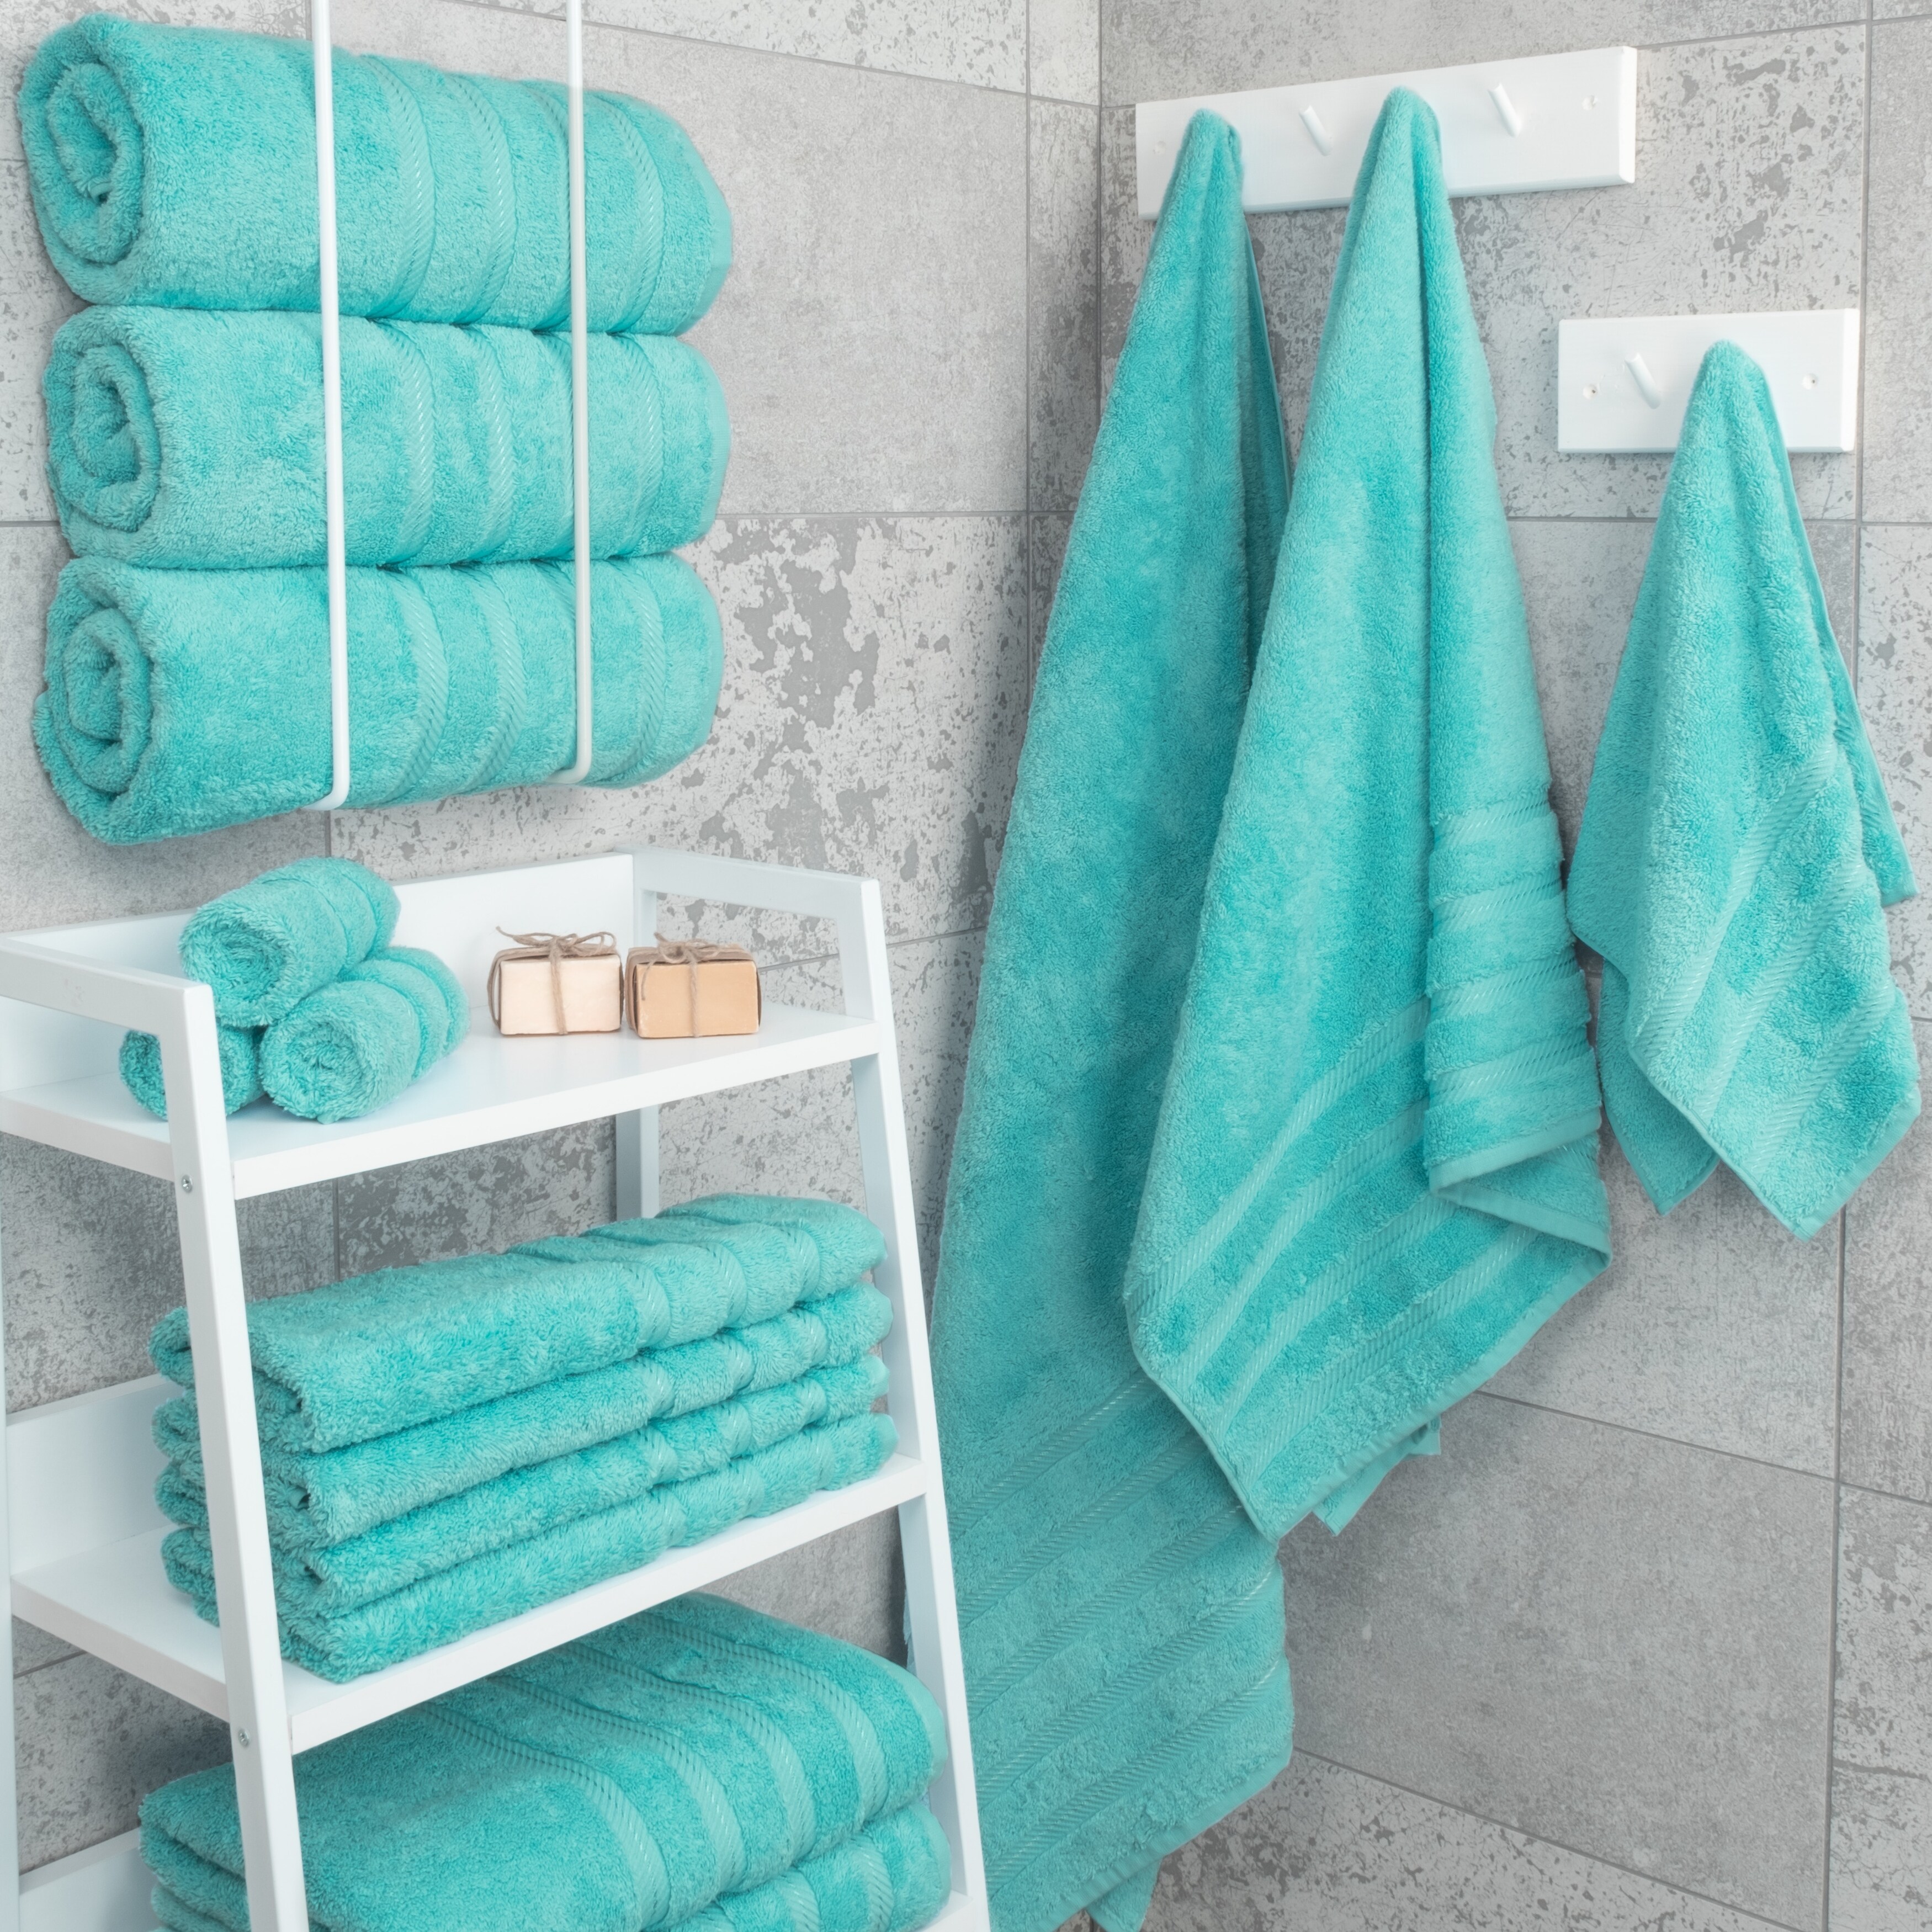 https://ak1.ostkcdn.com/images/products/is/images/direct/1e92374be0b47b00972cd95334f46ddfd9c0cb72/American-Soft-Linen-Turkish-Cotton-4-Piece-Bath-Towel-Set.jpg